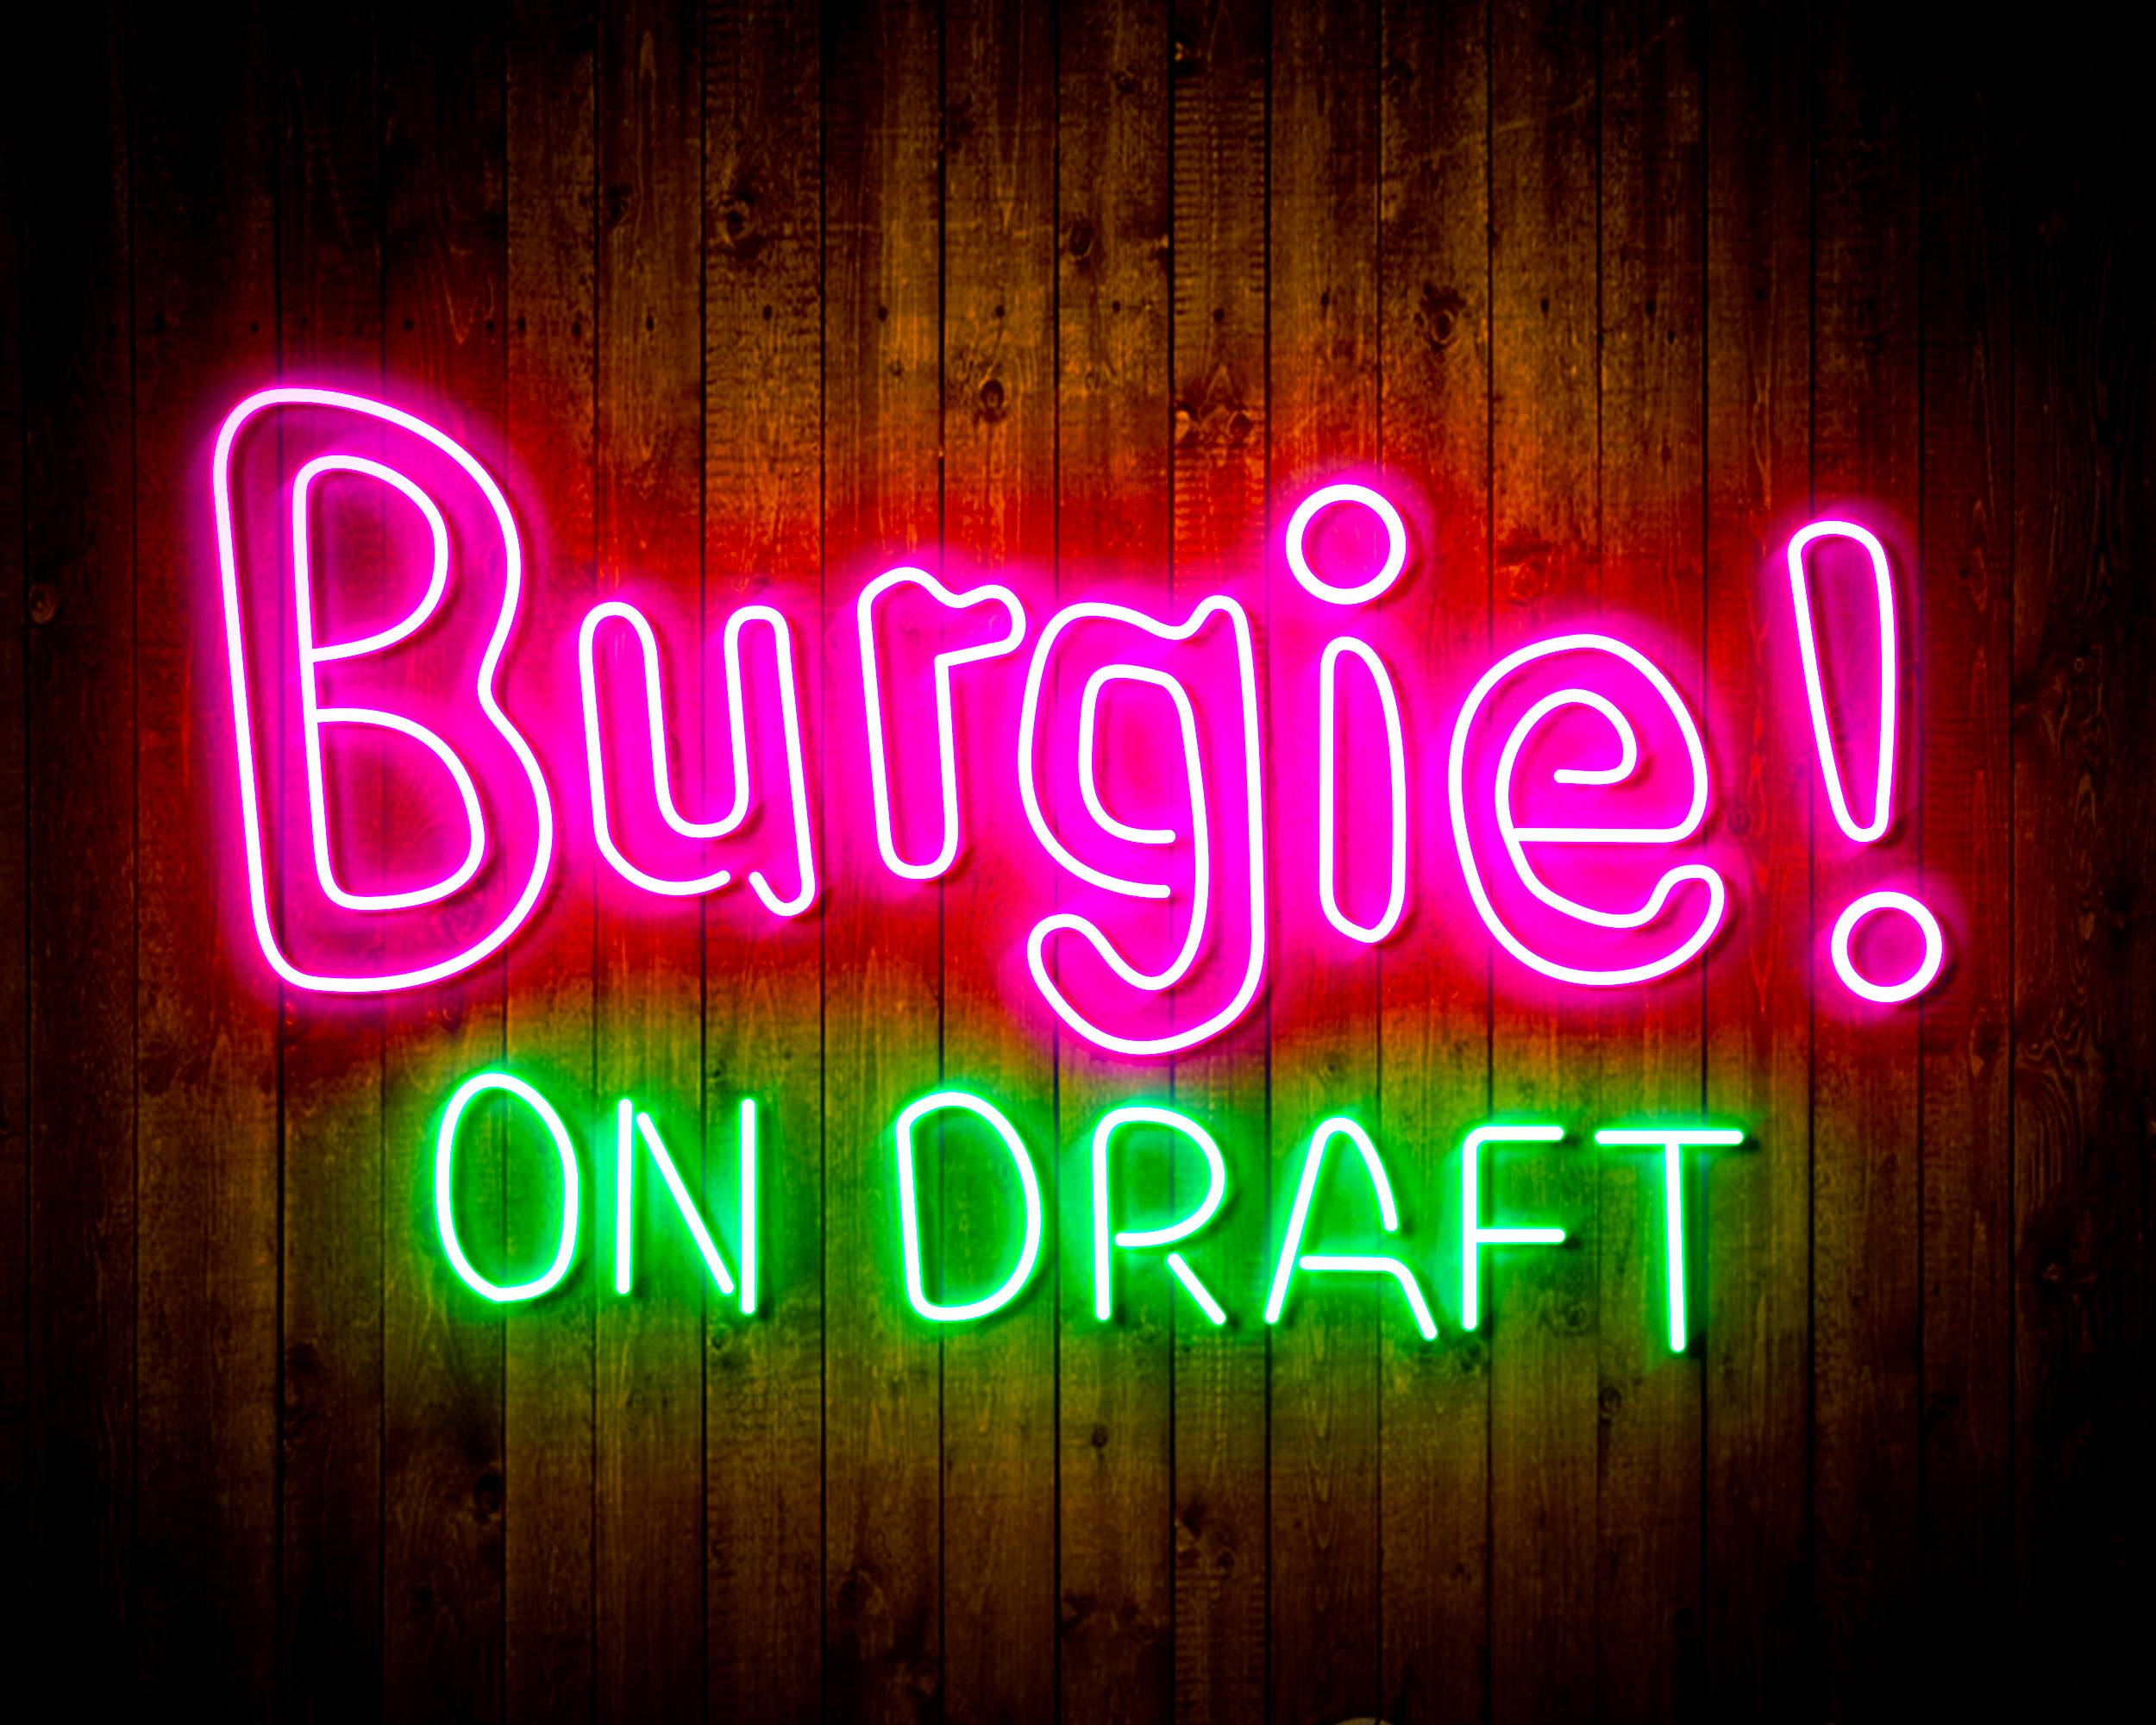 Burgie! On Draft Handmade LED Neon Light Sign